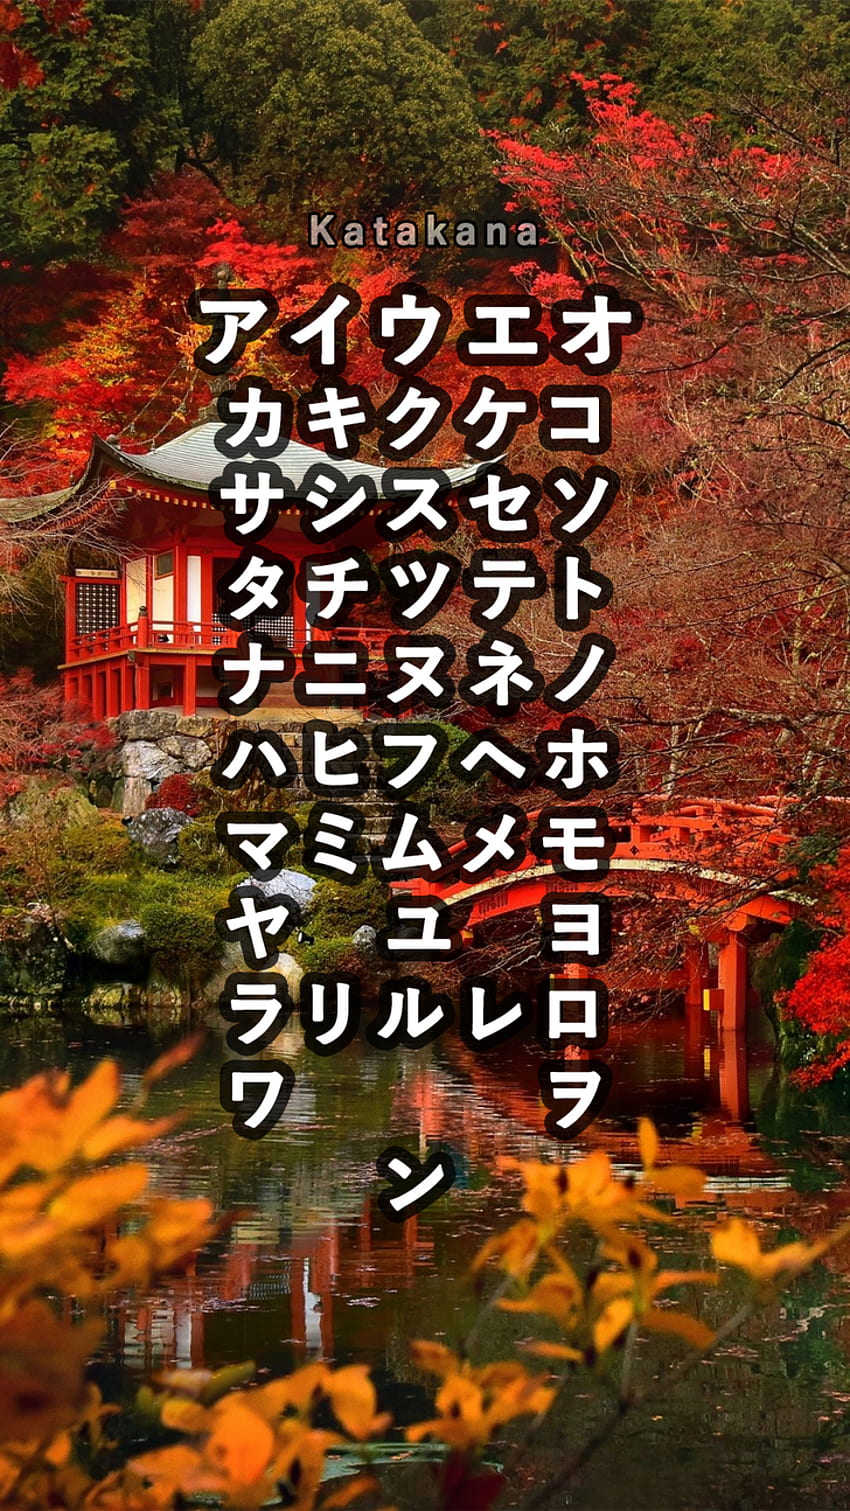 Imgur: The magic of the Internet, Katakana HD phone wallpaper